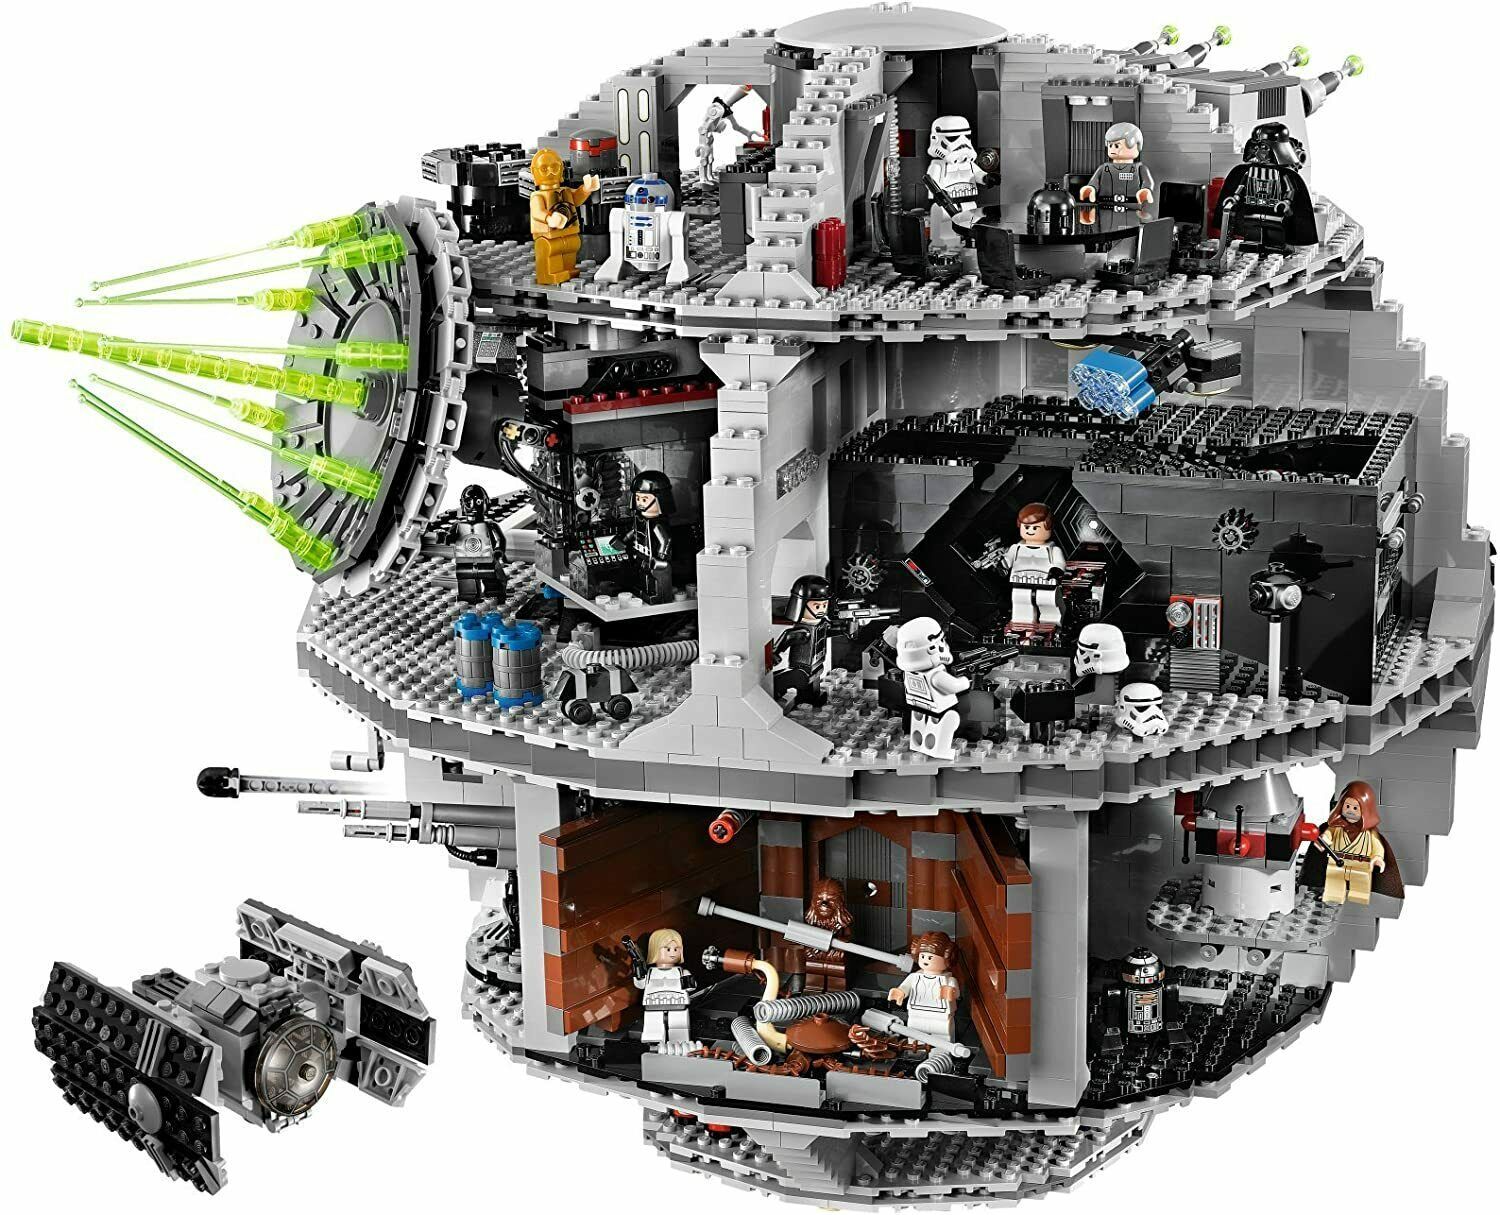 LEGO Star Wars Death Star 2008 (10188) New in Box! LEGO Complete